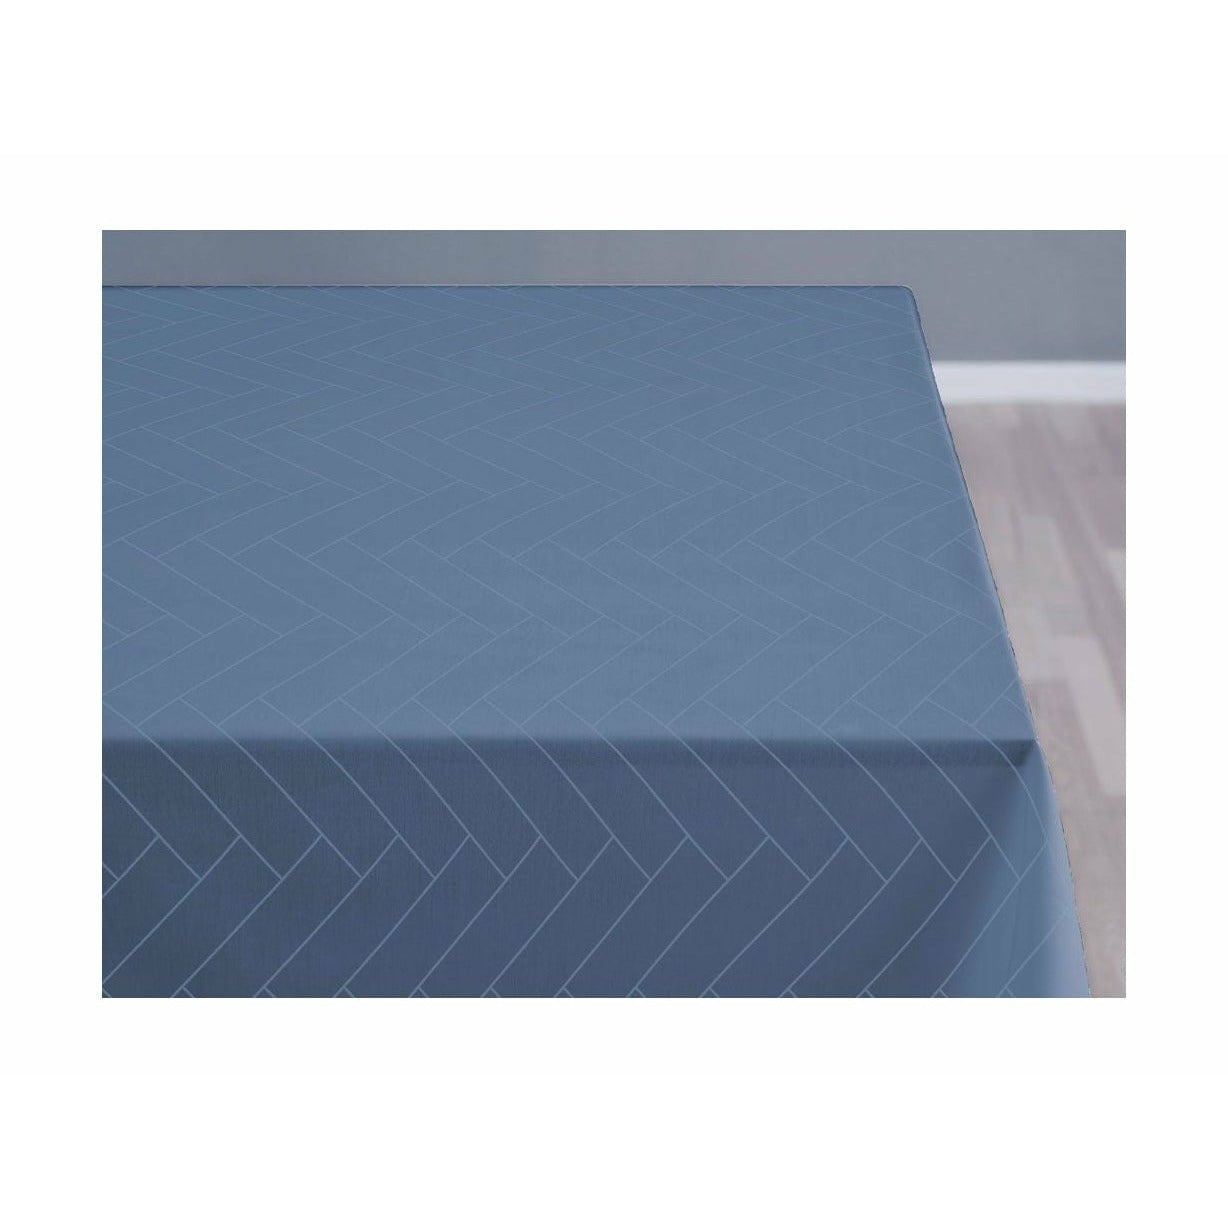 Södahl piastrelle damask tovaglie 320x140 cm, blu cielo